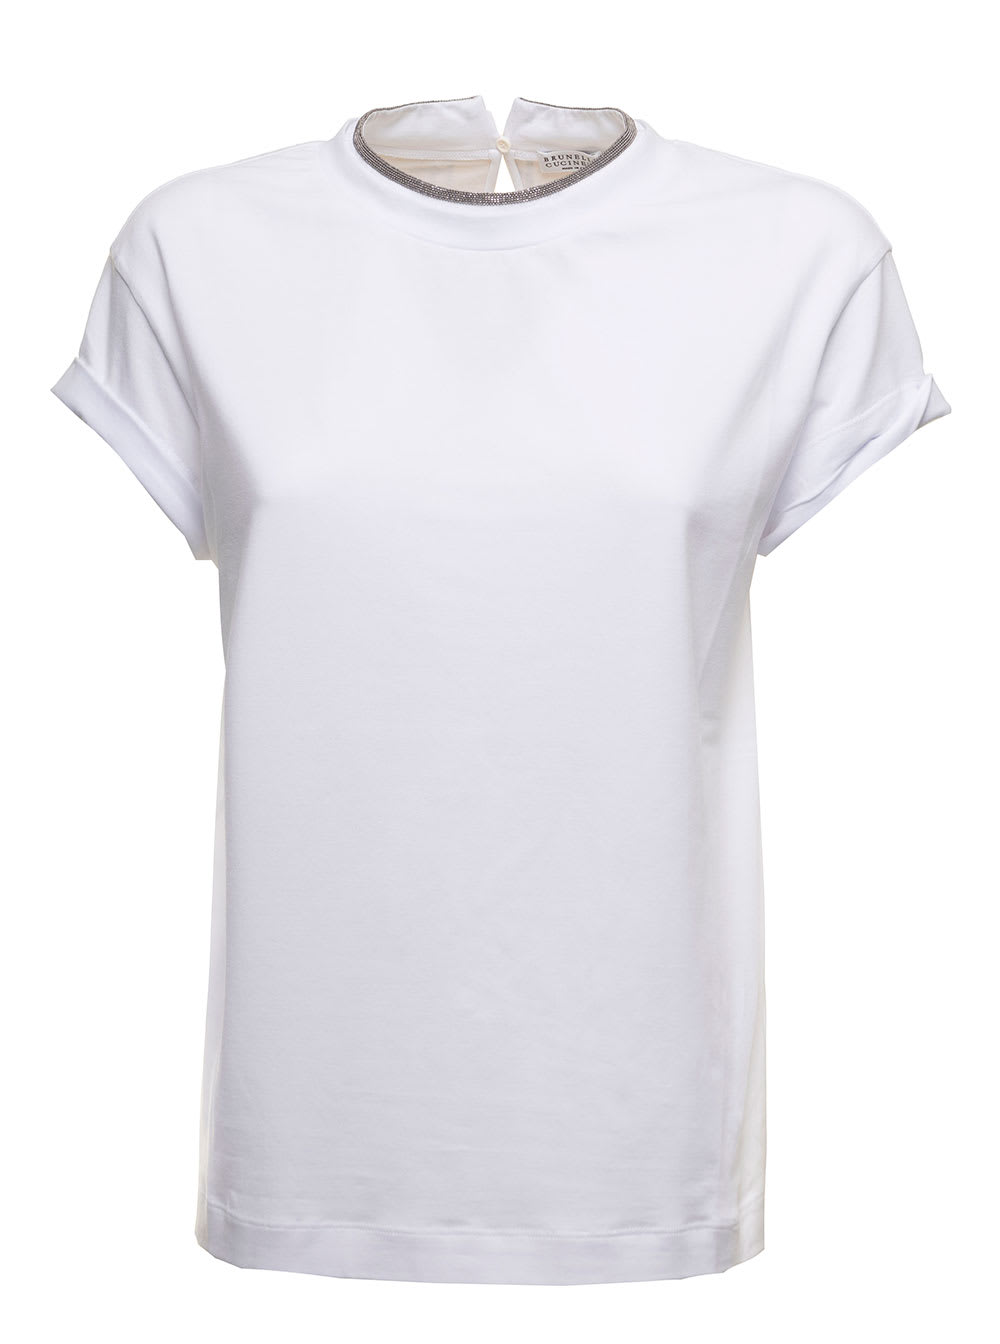 Brunello Cucinelli Womans White Cotton T-shirt With Monile Crew Neck